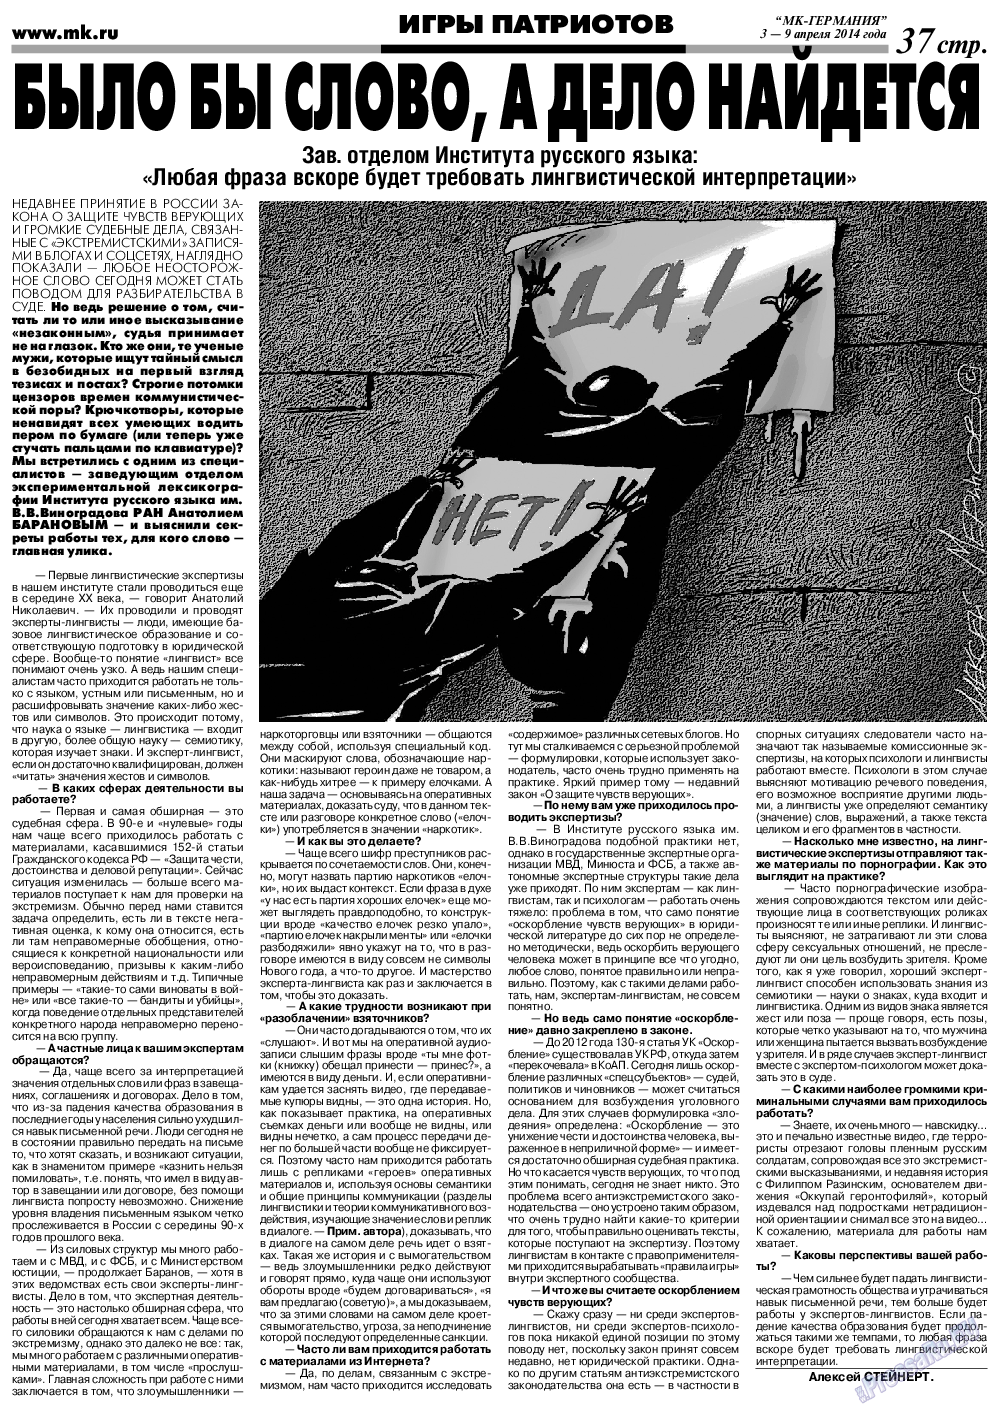 МК-Германия, газета. 2014 №14 стр.37